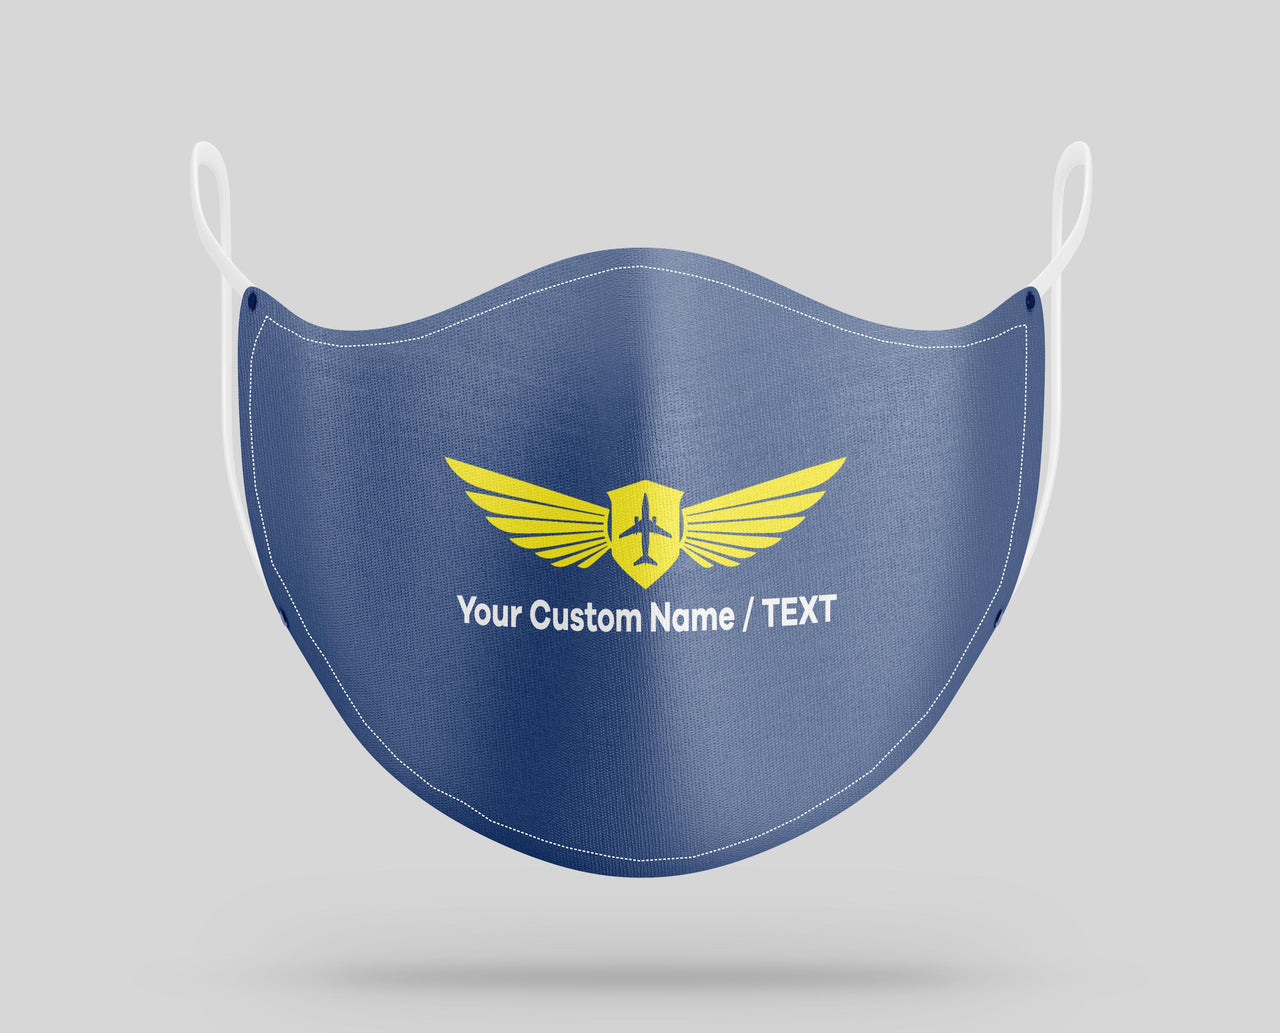 Your Custom Name & Text & Badge (2) Designed Face Masks